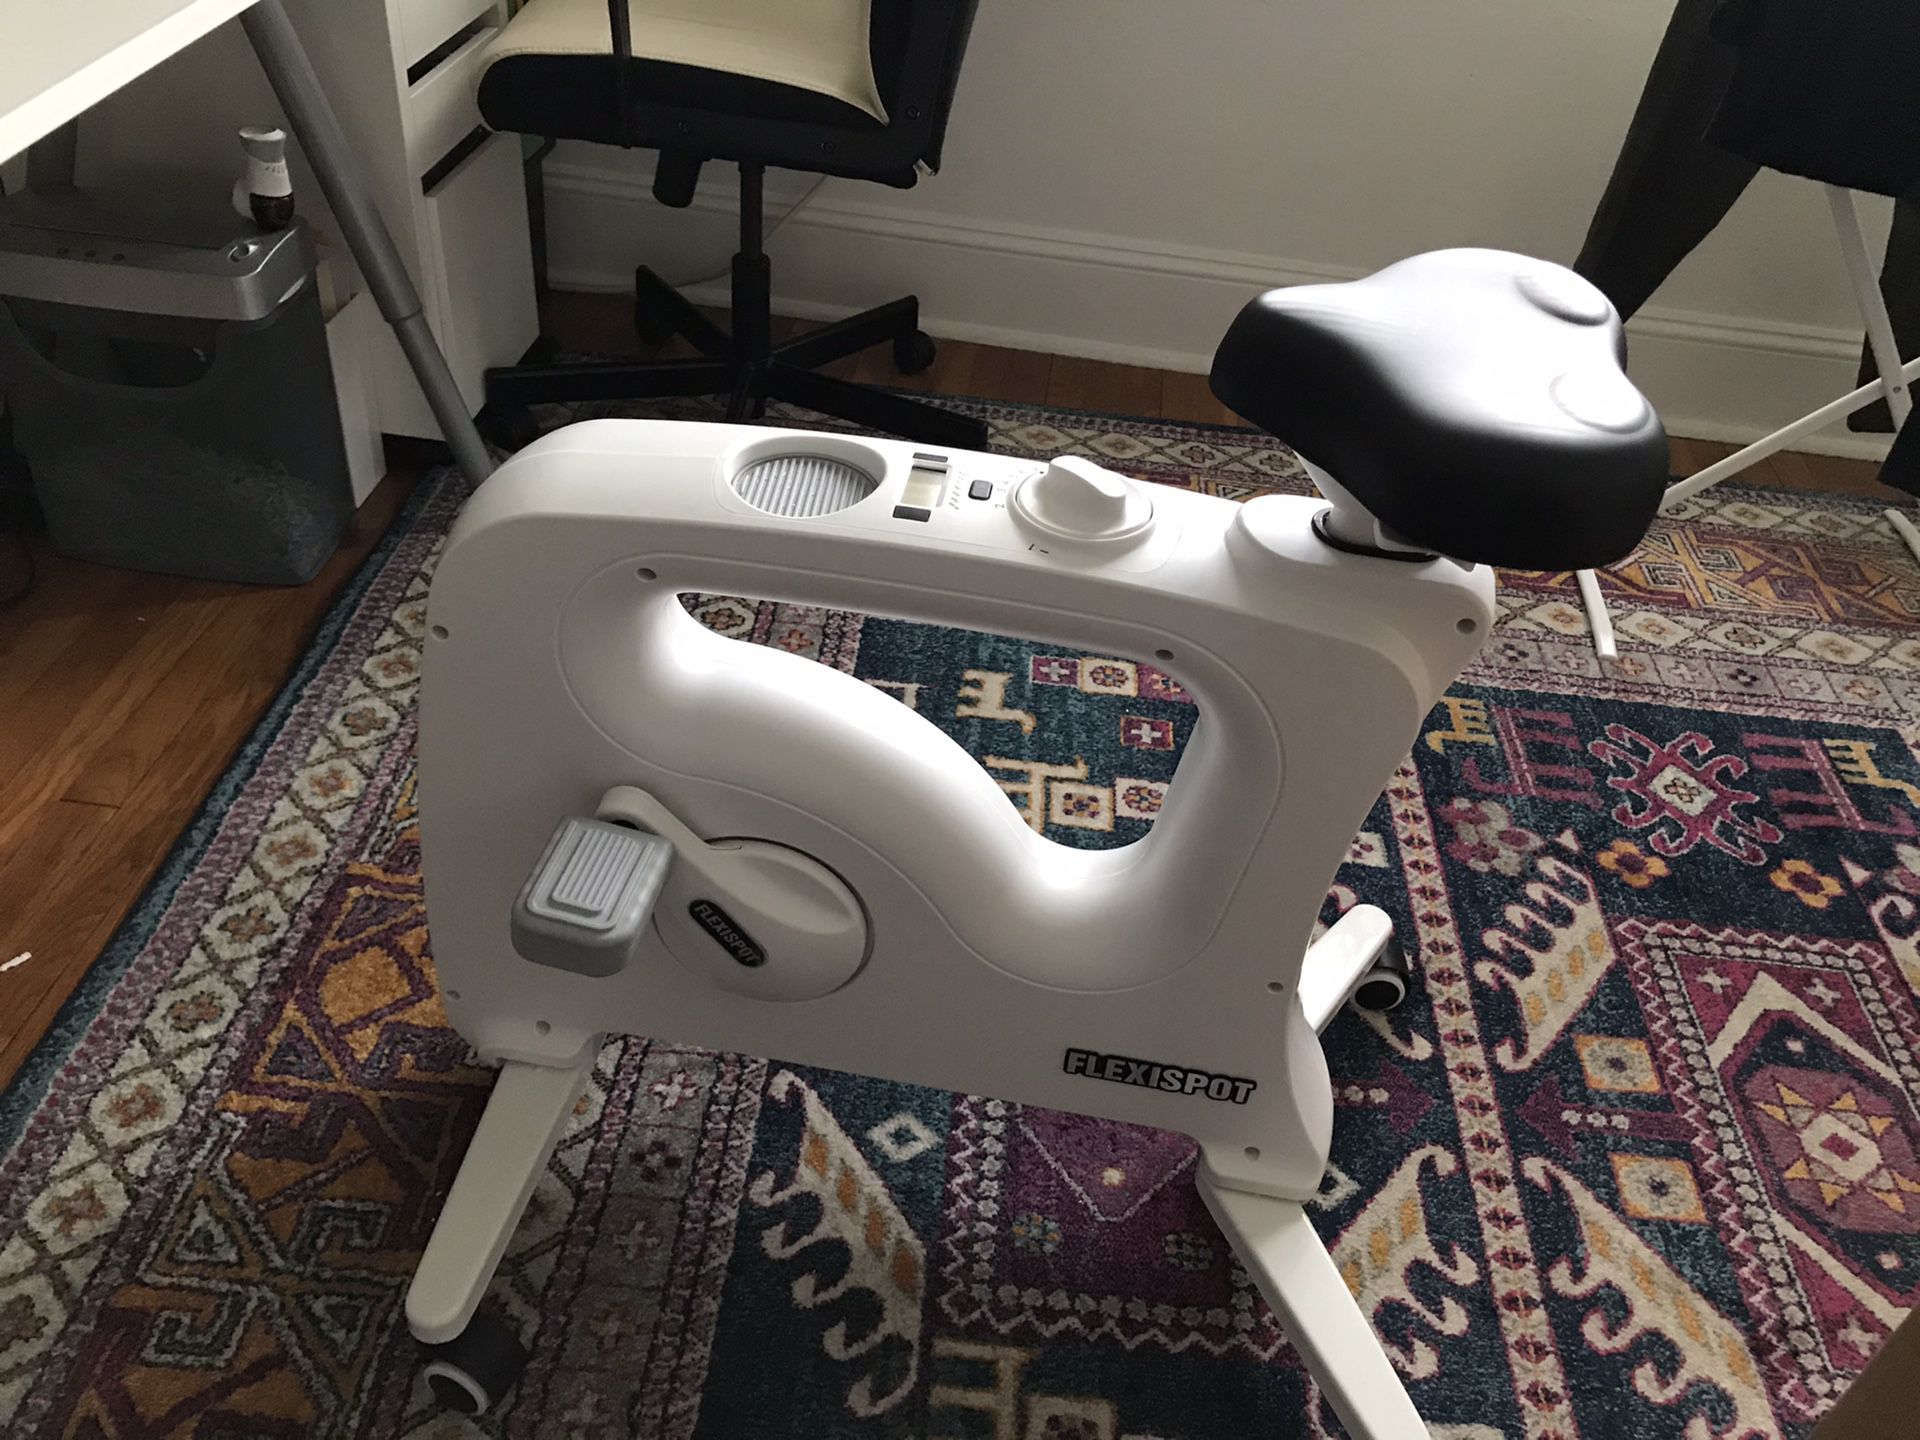 Flexispot Adjustable Exercise Bike Desk Standing Desk Cycle